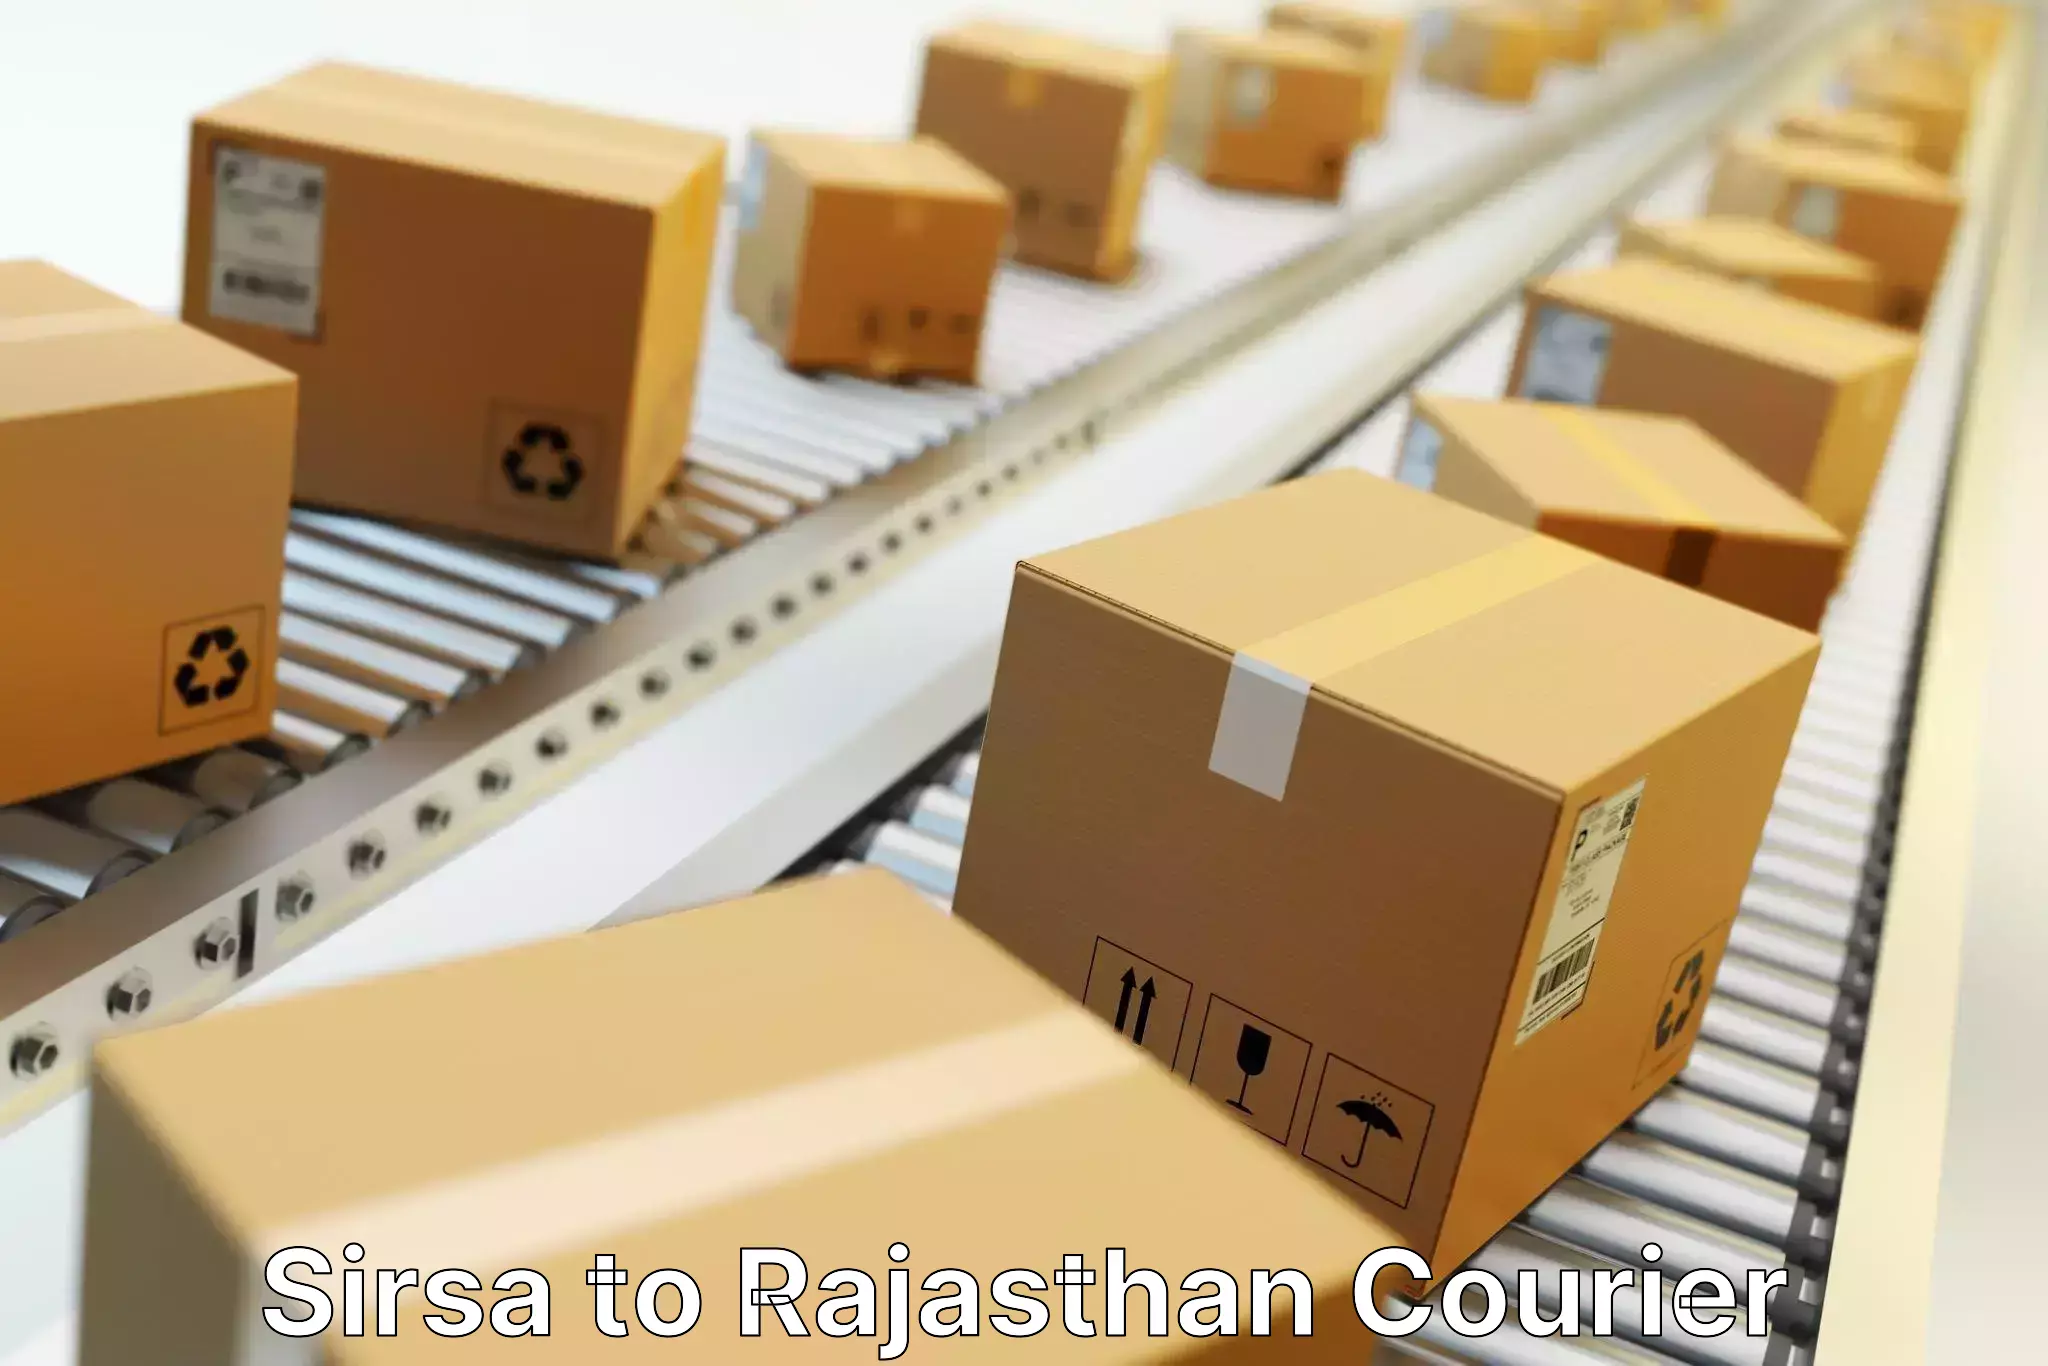 State-of-the-art courier technology Sirsa to Viratnagar